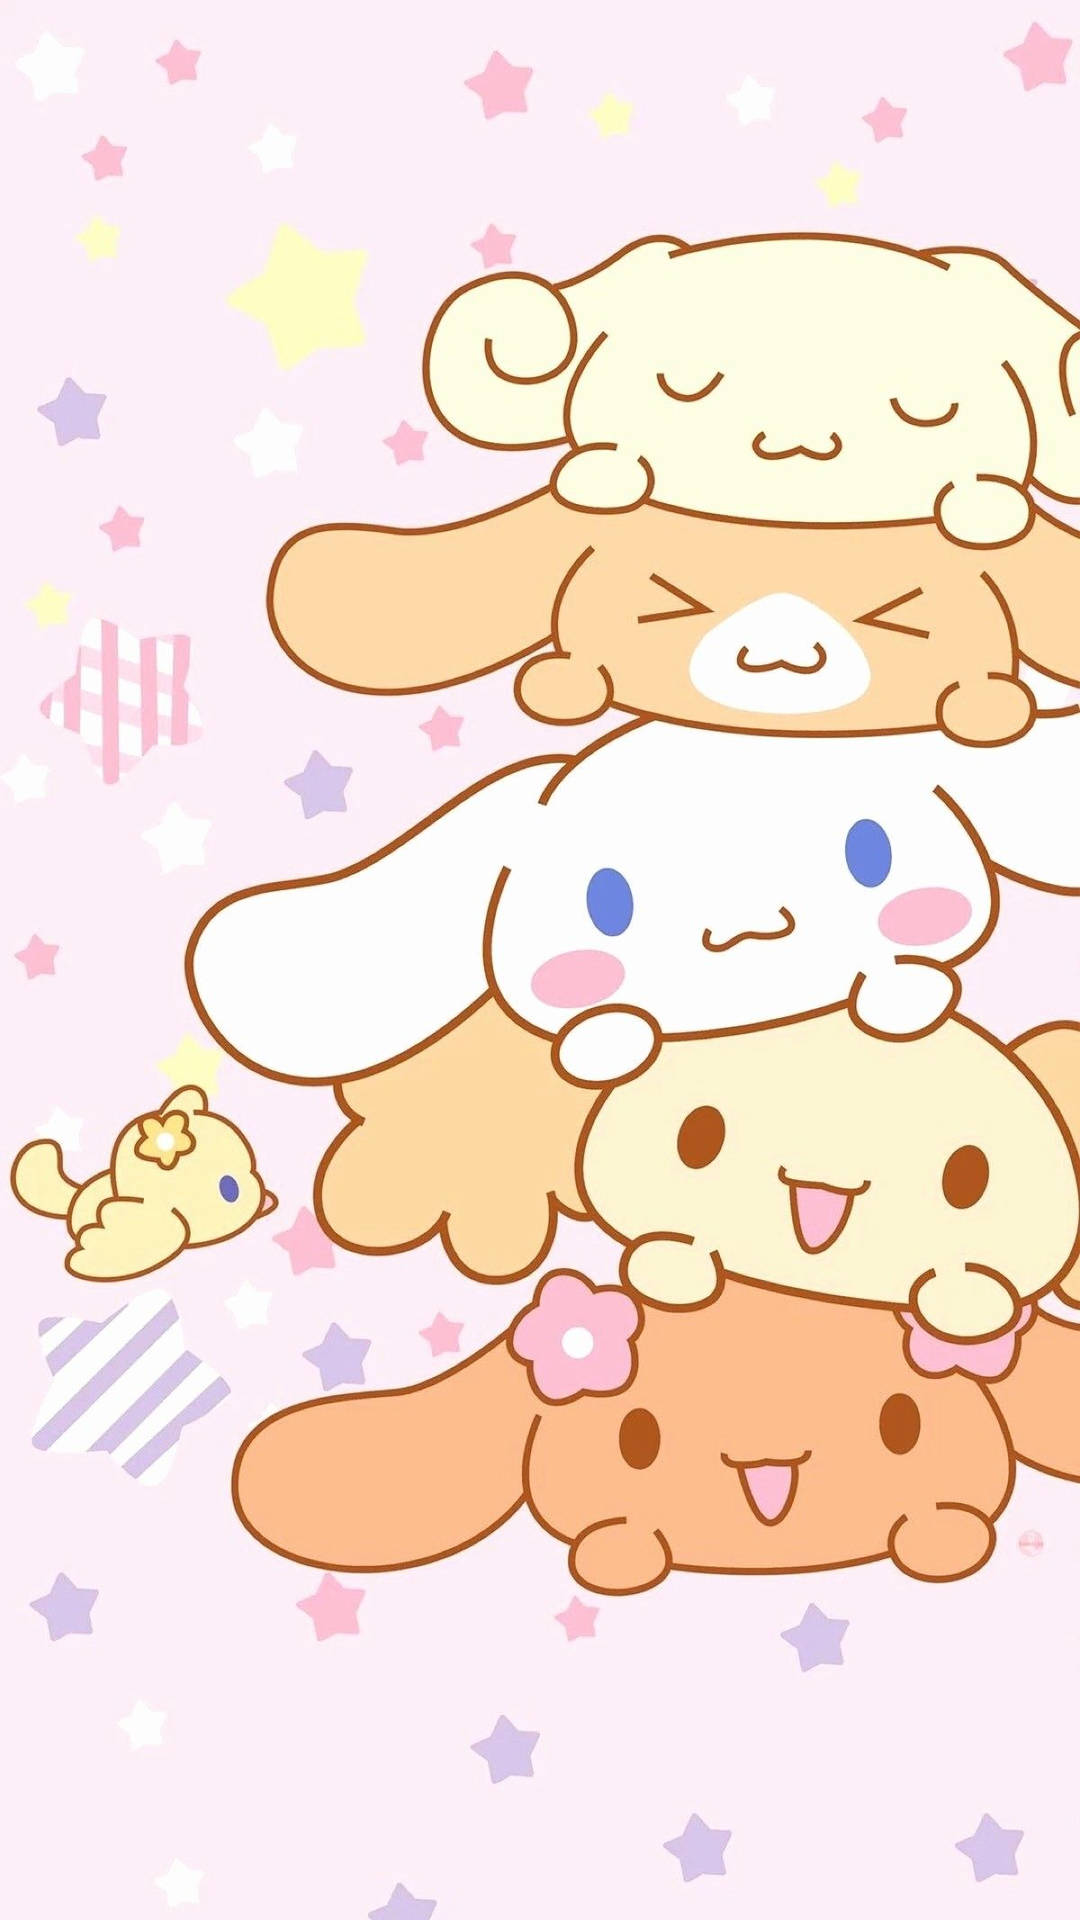 Cute Kawaii Wallpaper for ipad ! (Famous Sanrio Characters Ver